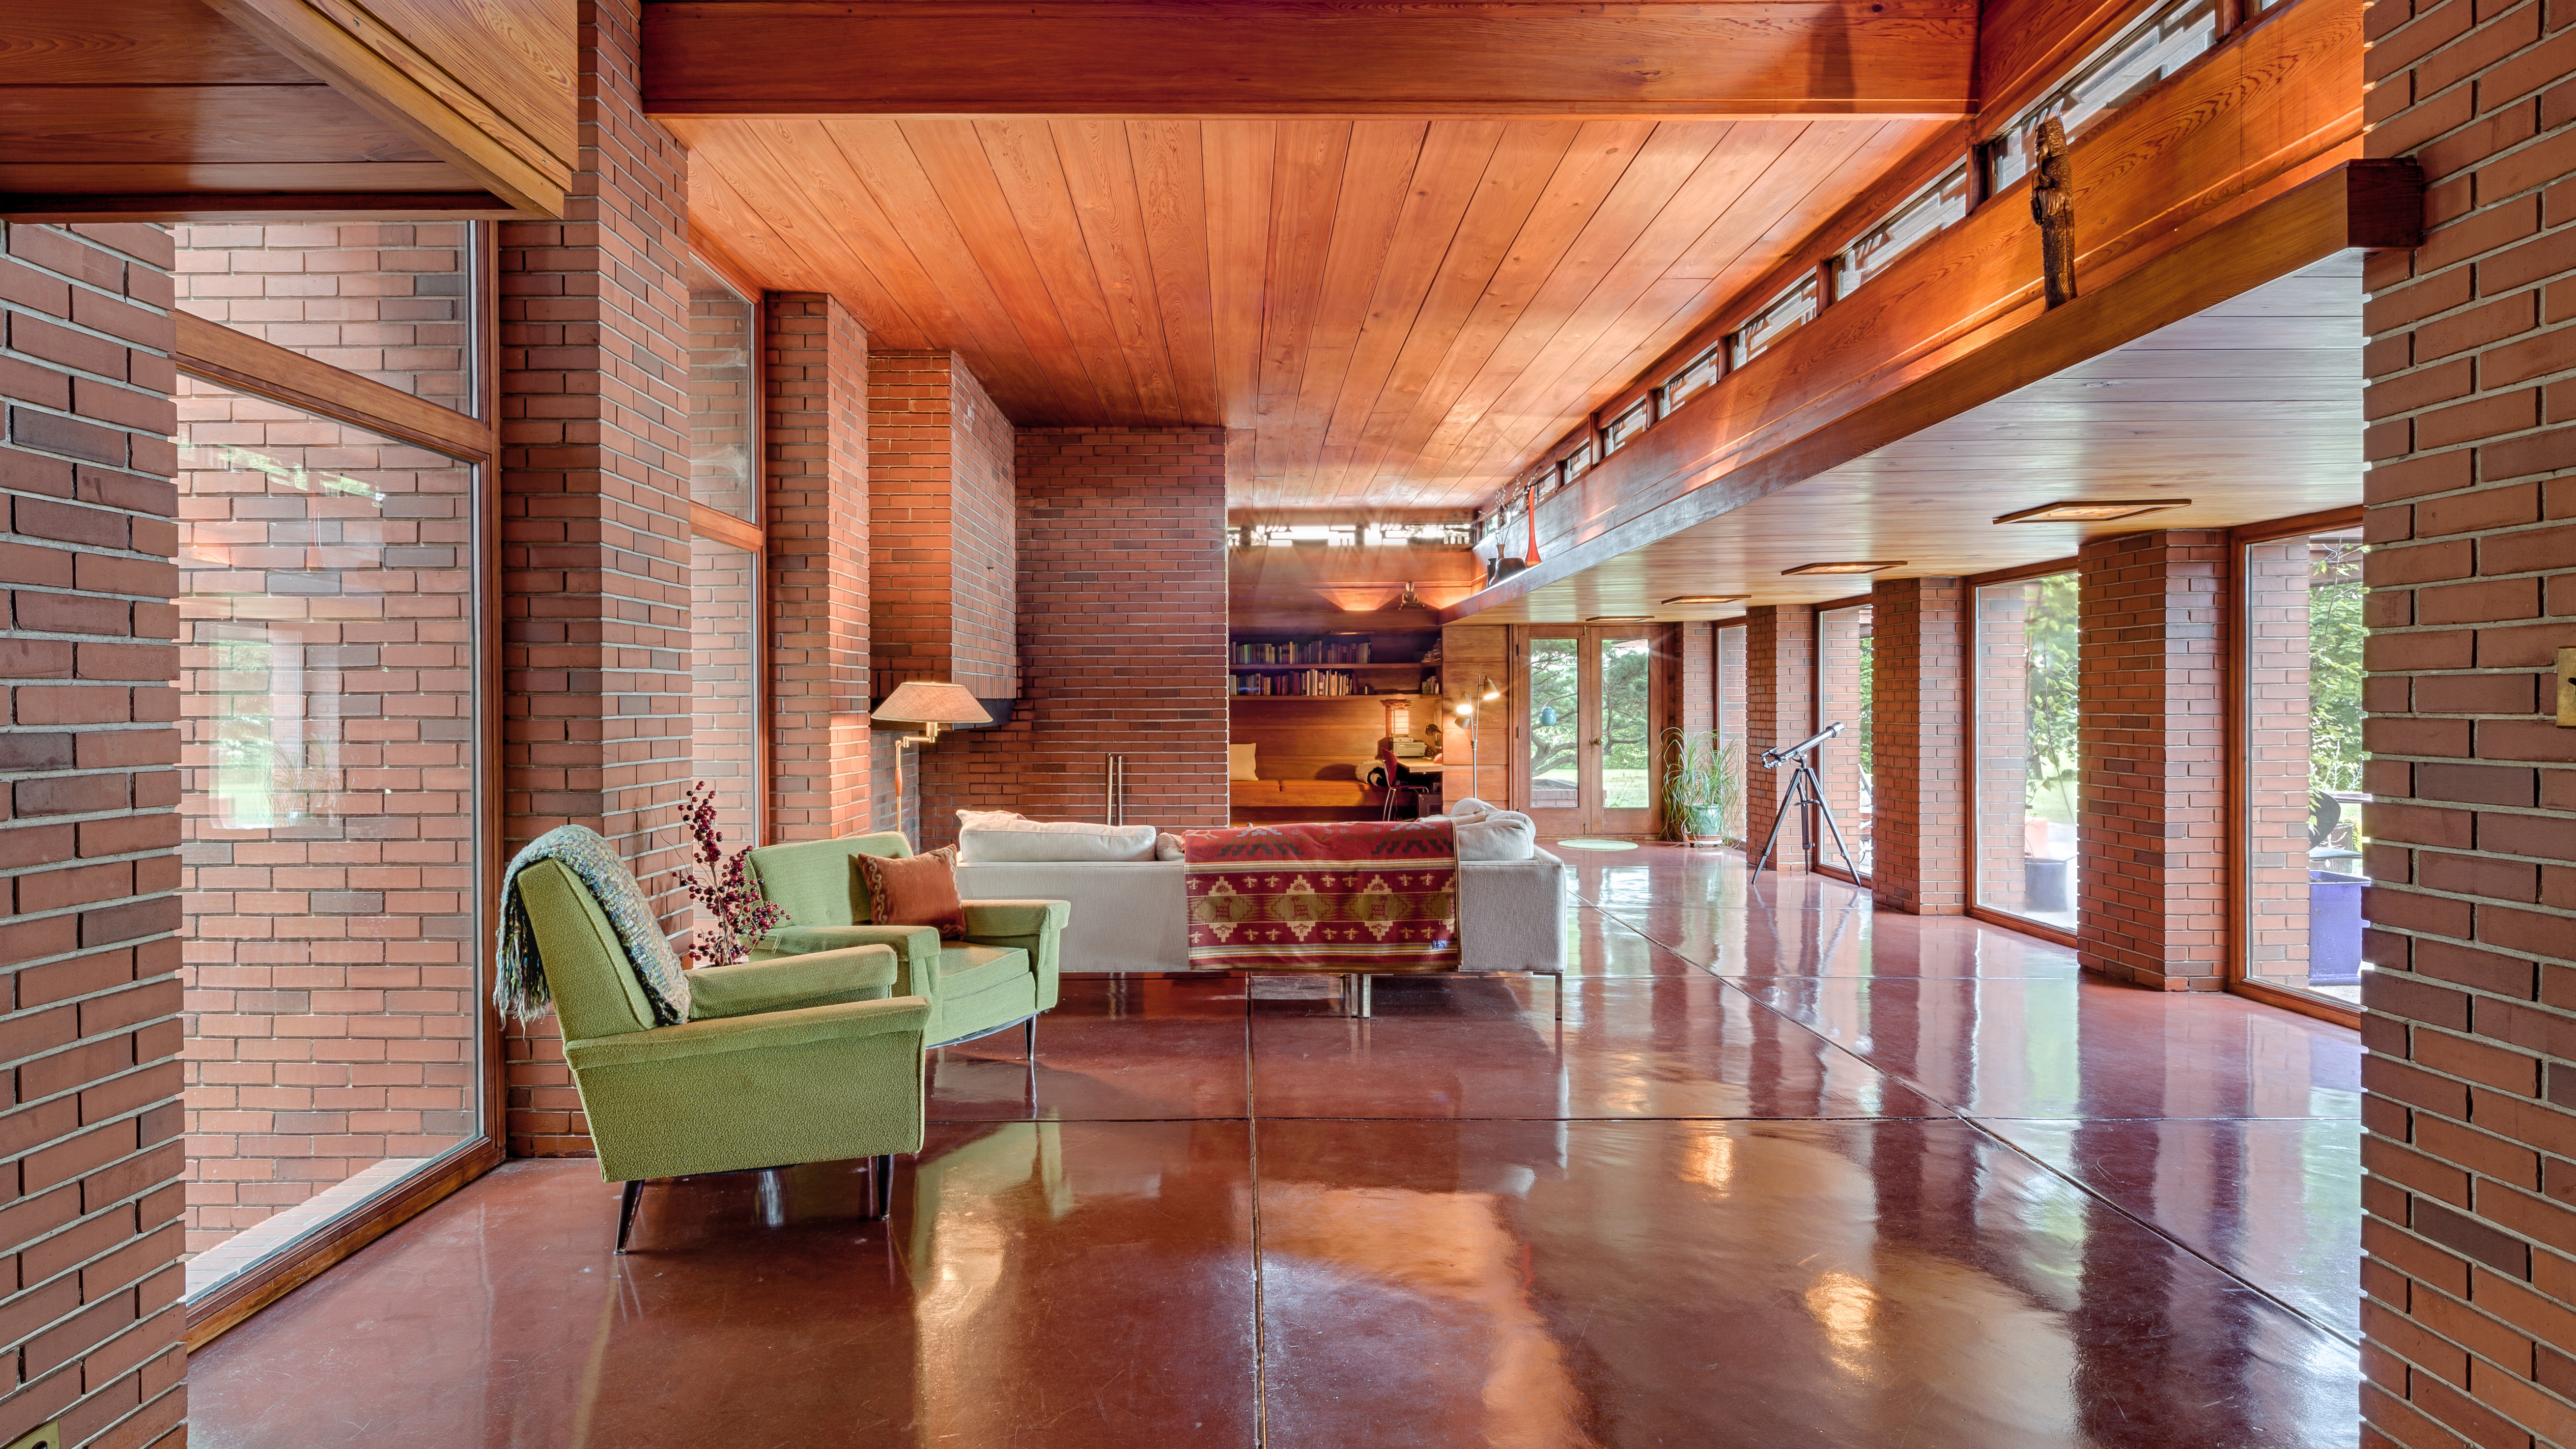 Frank Lloyd Wright rental homes for design lovers in the US | Livingetc